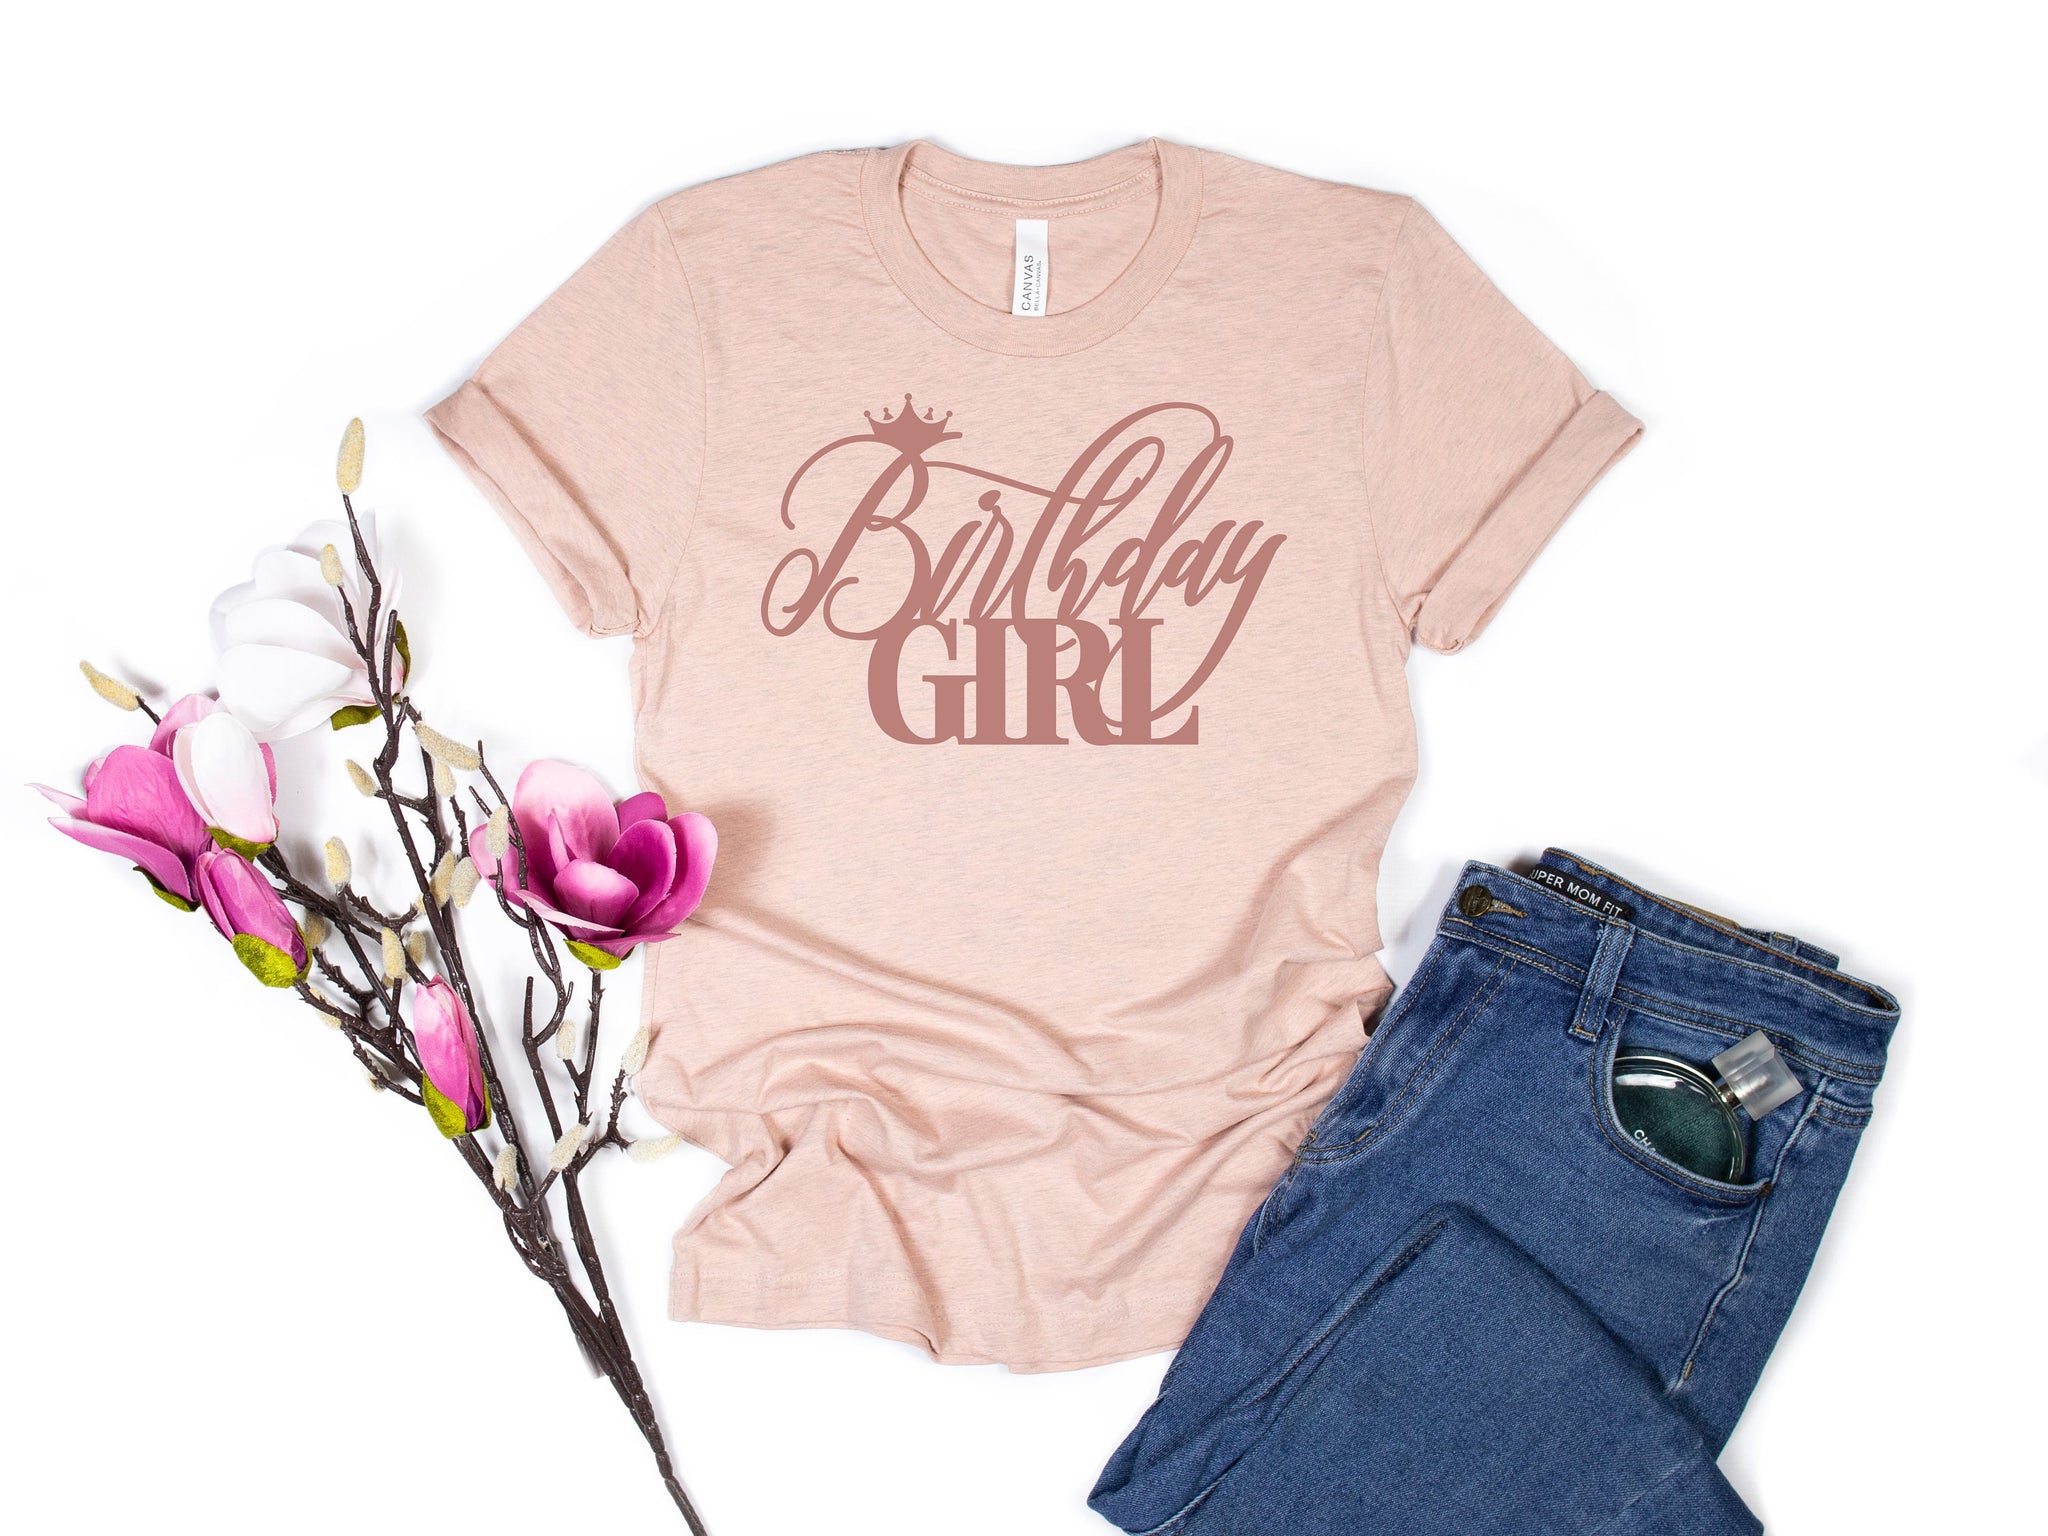 Birthday Girl T-Shirt,Bday Shirt,Birthday Gift,Birthday Girl Tee,Birthday Party Shirt,Cool gift,Best Quality, Fast Shipping,Woman Shirt